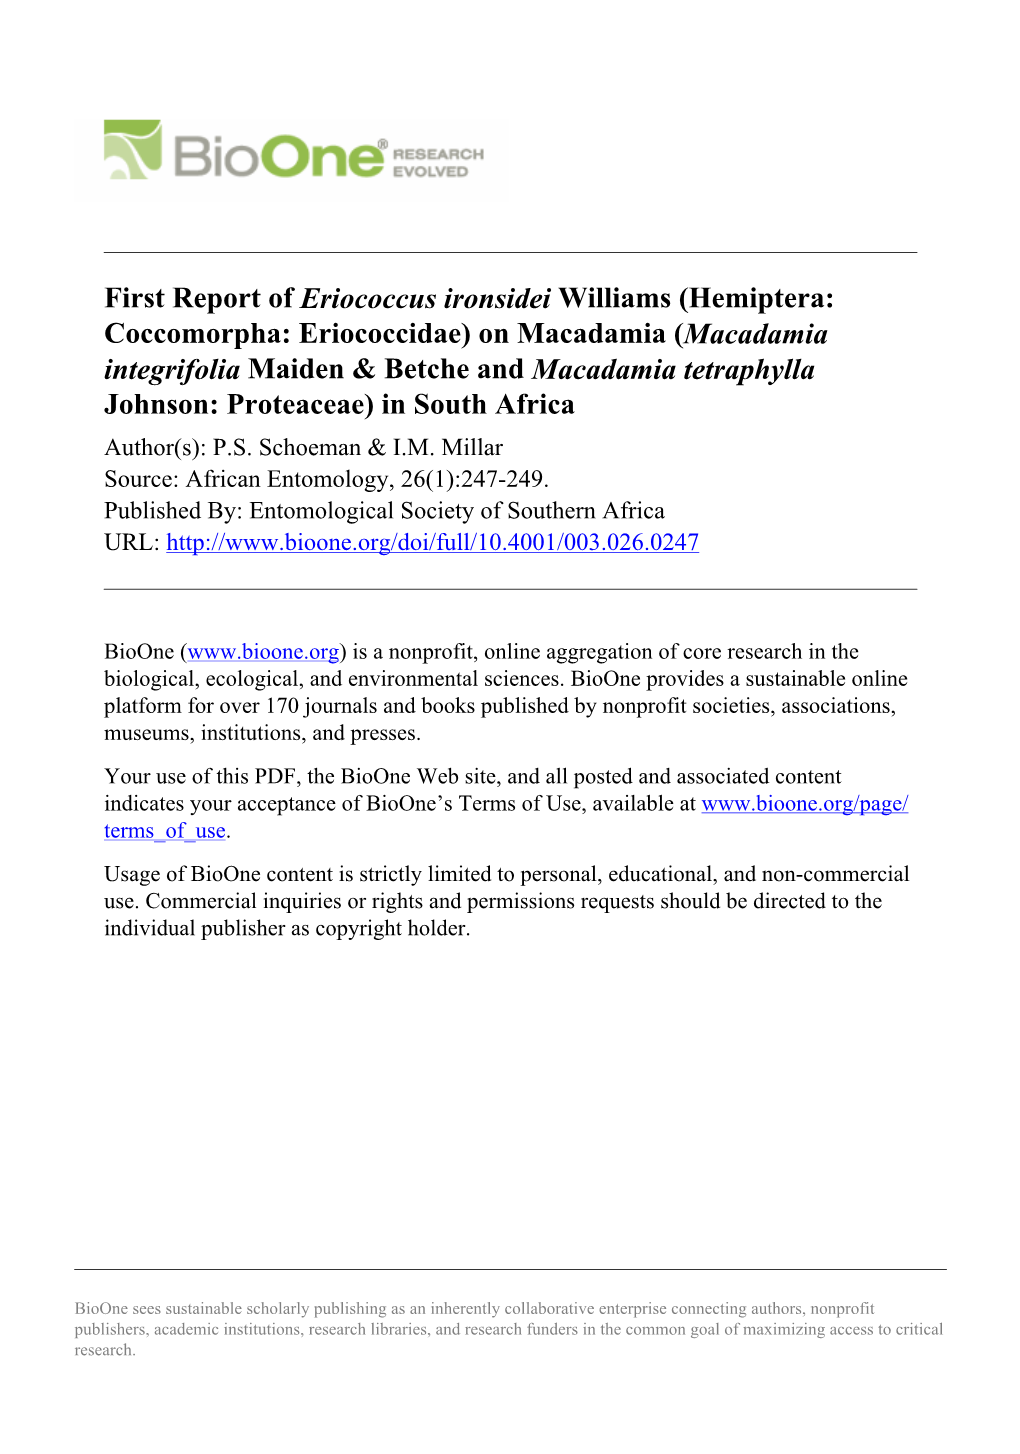 First Report of Eriococcus Ironsidei Williams (Hemiptera: Coccomorpha